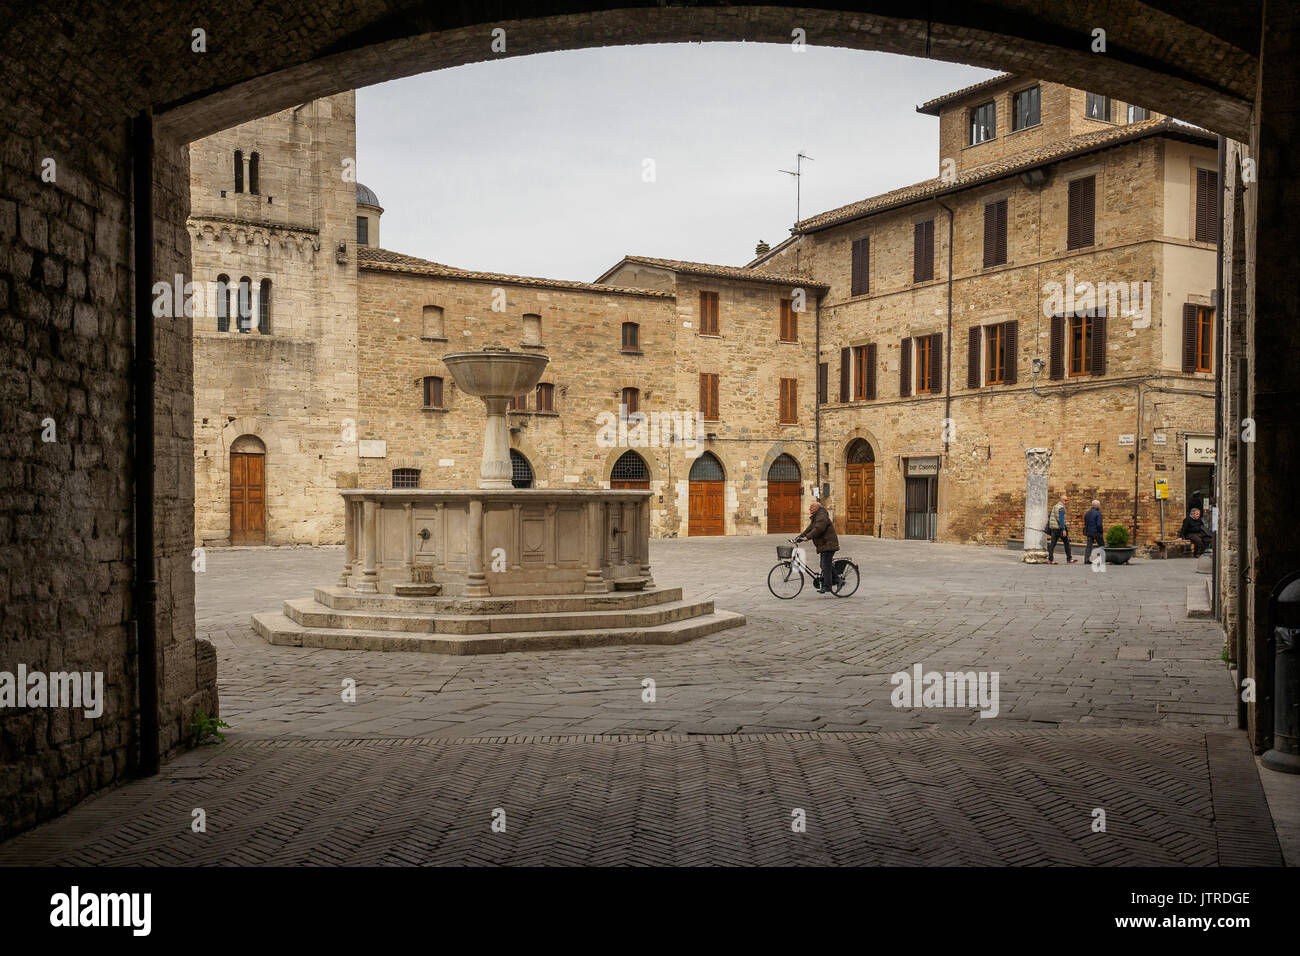 Medieval Piazza Silvestri in Bevagna (Italy). 2017. Stock Photo